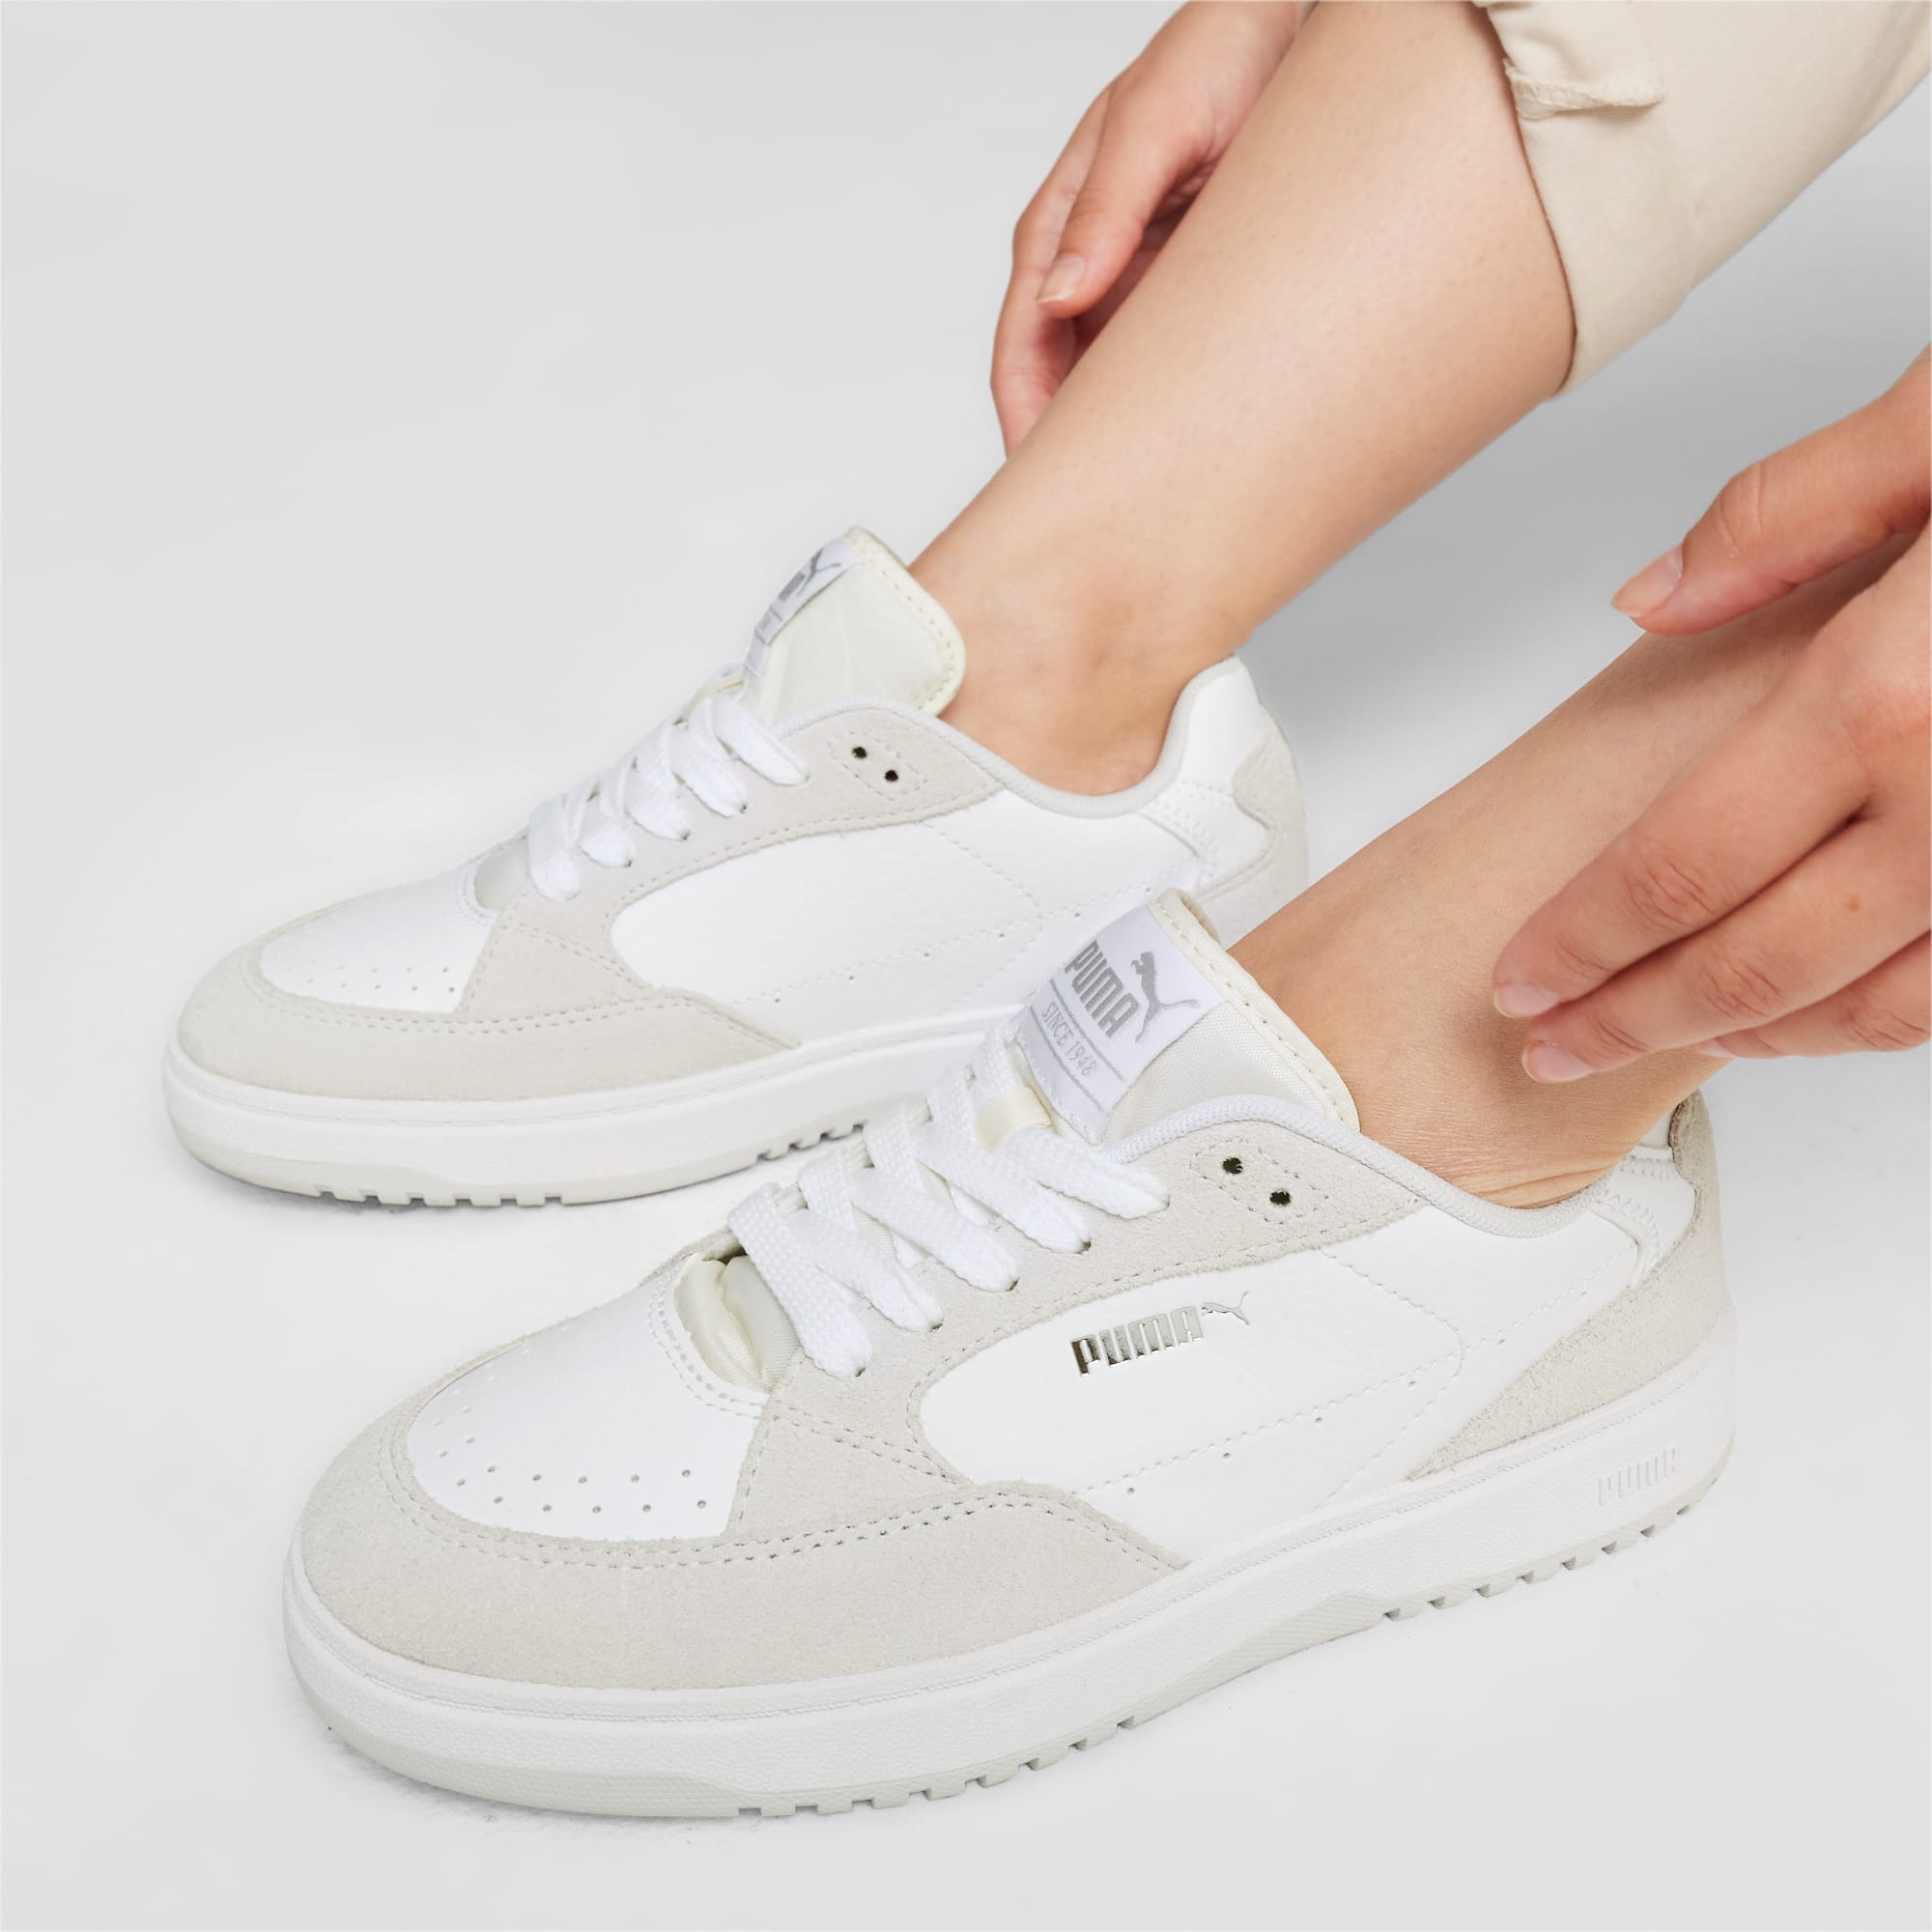 Chaussure Sneakers PUMA Doublecourt Soft VTG Femme, Blanc/Gris